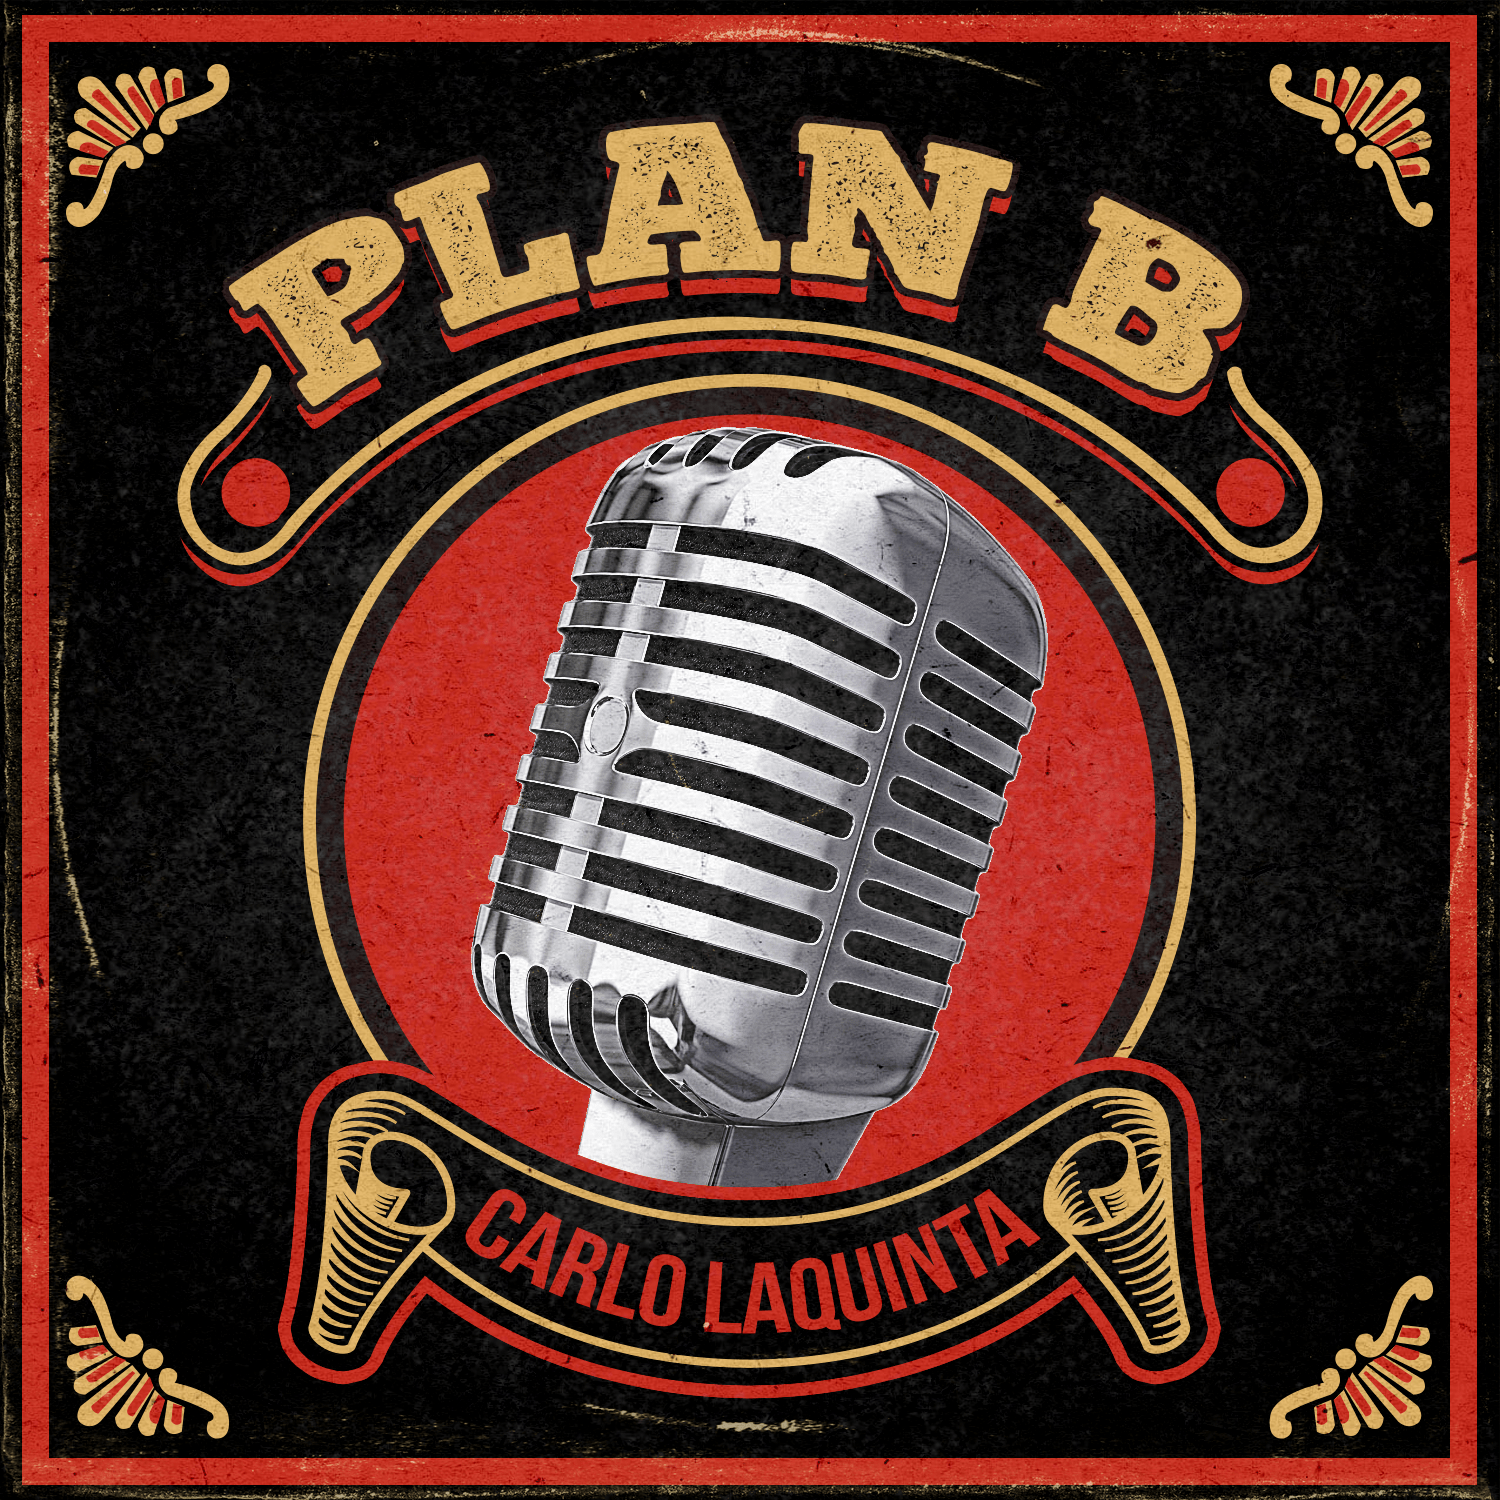 Plan B album via Warner Music Latina for use by 360 Magazine